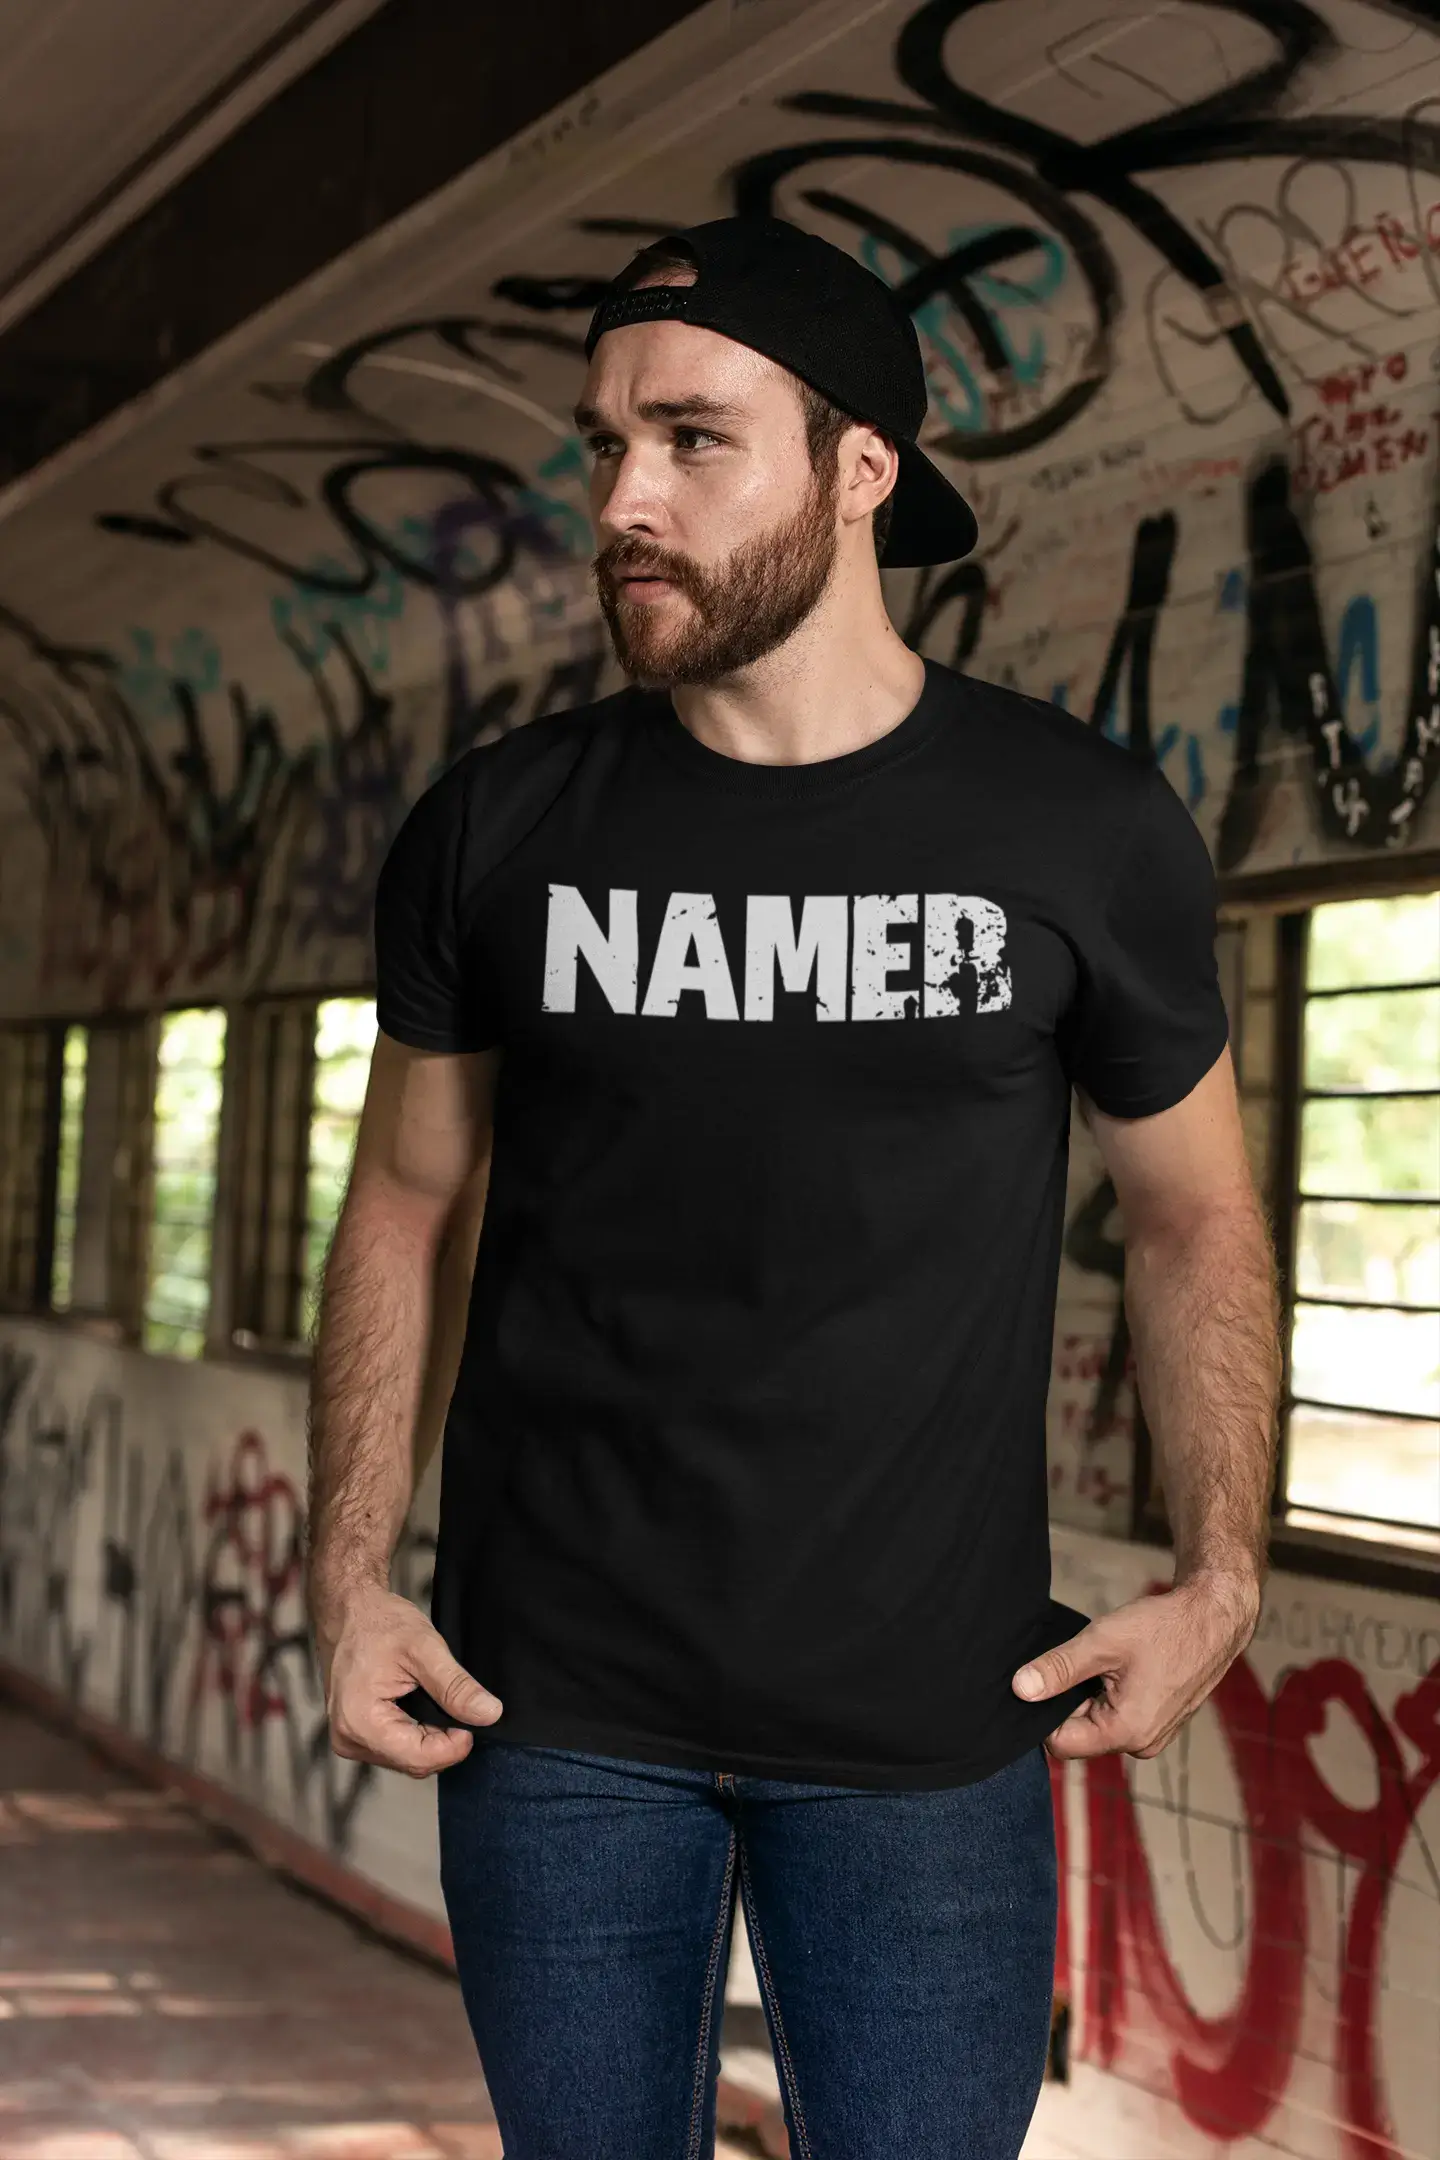 namer Men's Retro T shirt Black Birthday Gift 00553